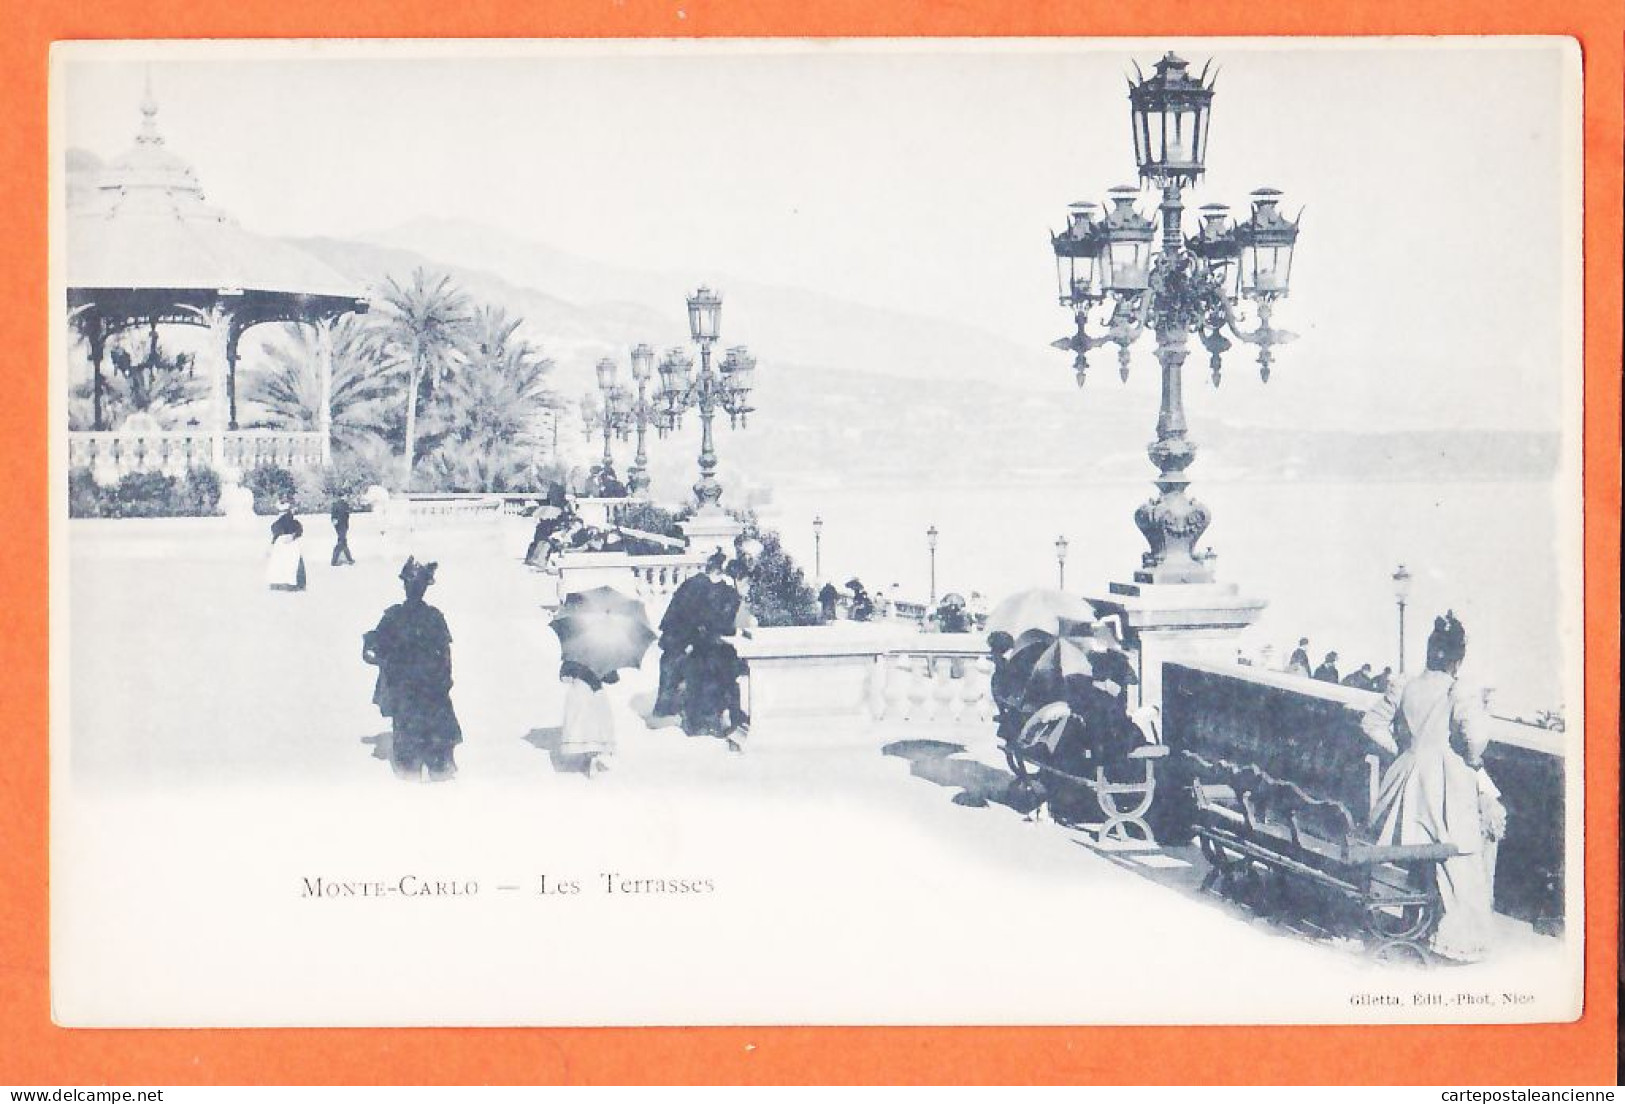 28816 / ⭐ MONTE-CARLO Monaco Les Terrasses 1900s GILETTA Photo Nice - Las Terrazas